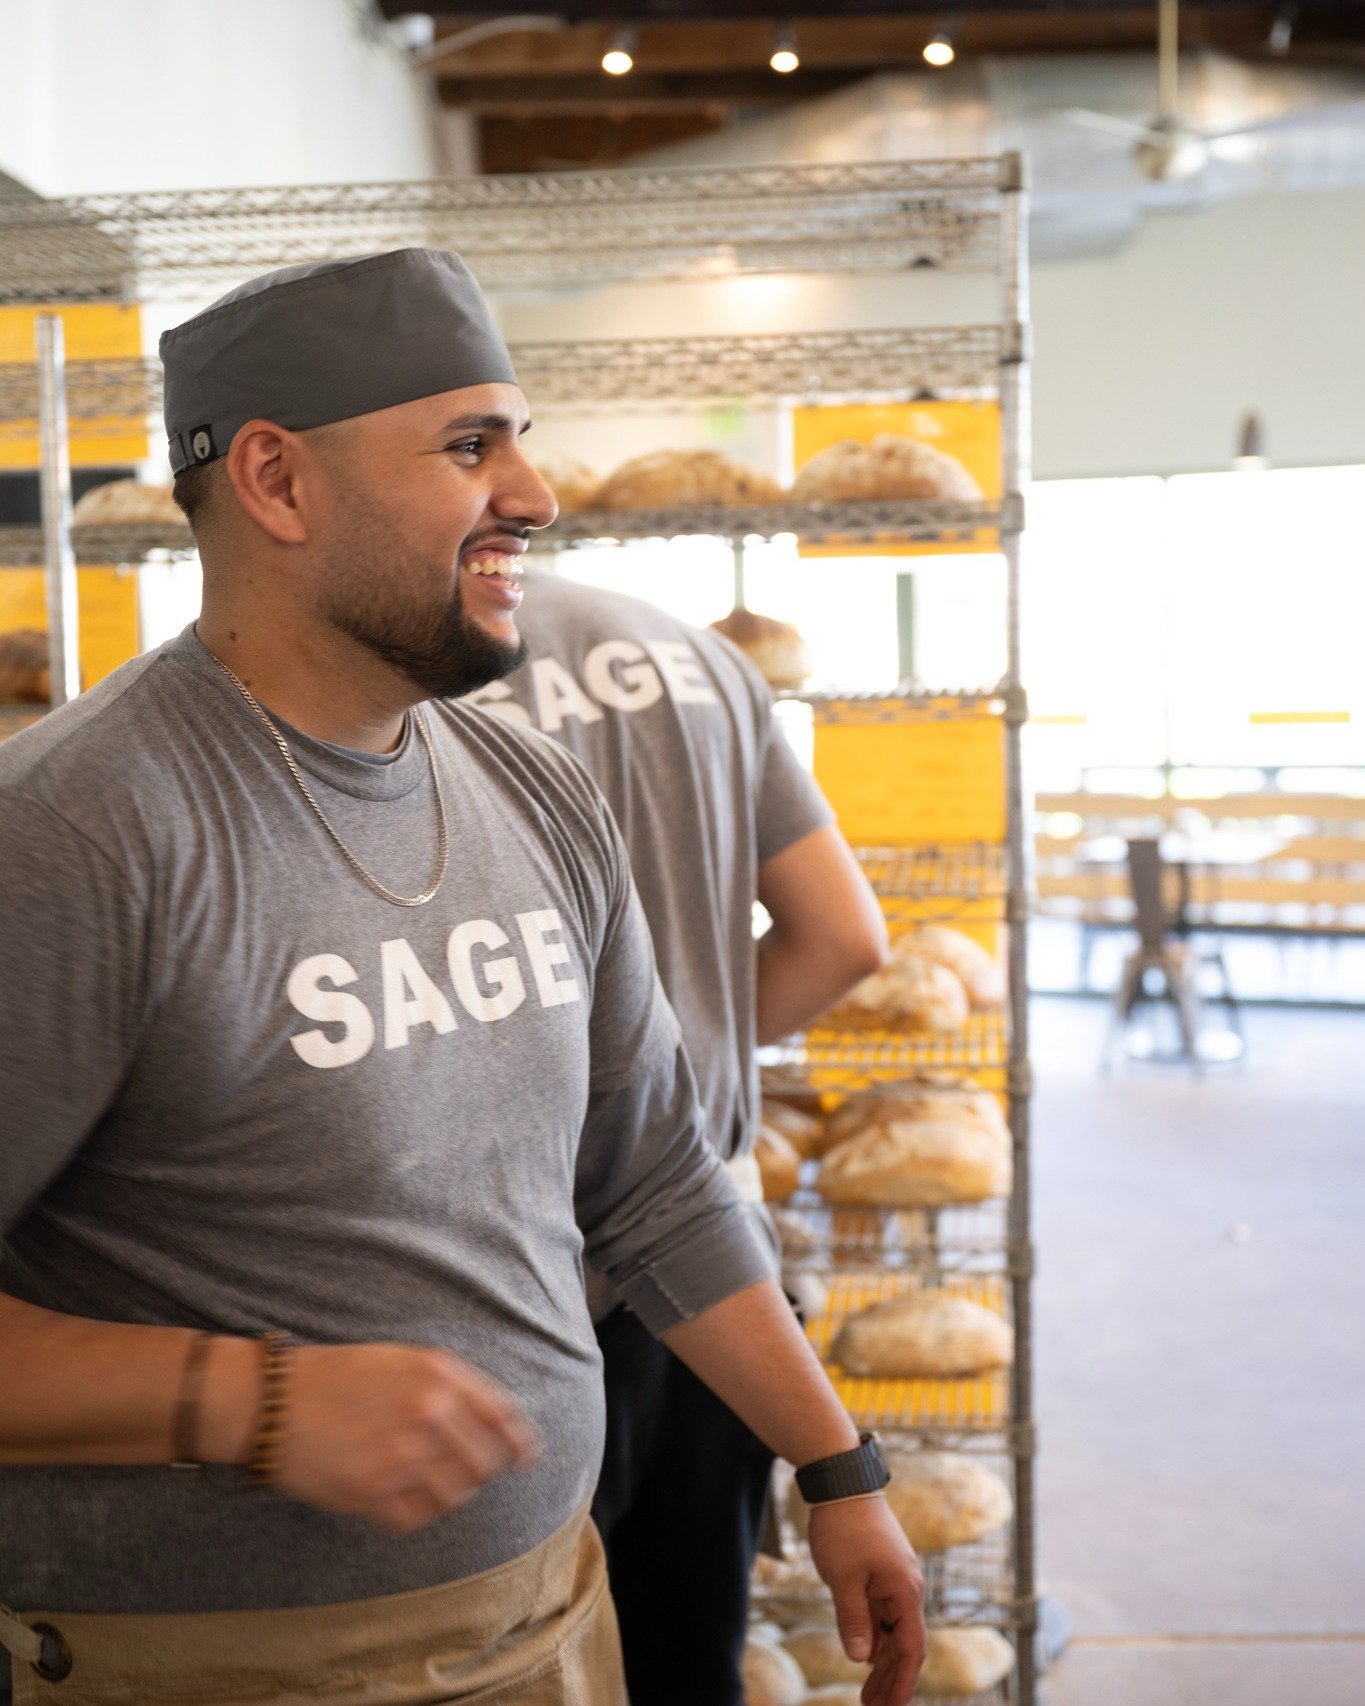 All smiles for the week ahead.
#SageBakehouse
📸 @douglasmerriam